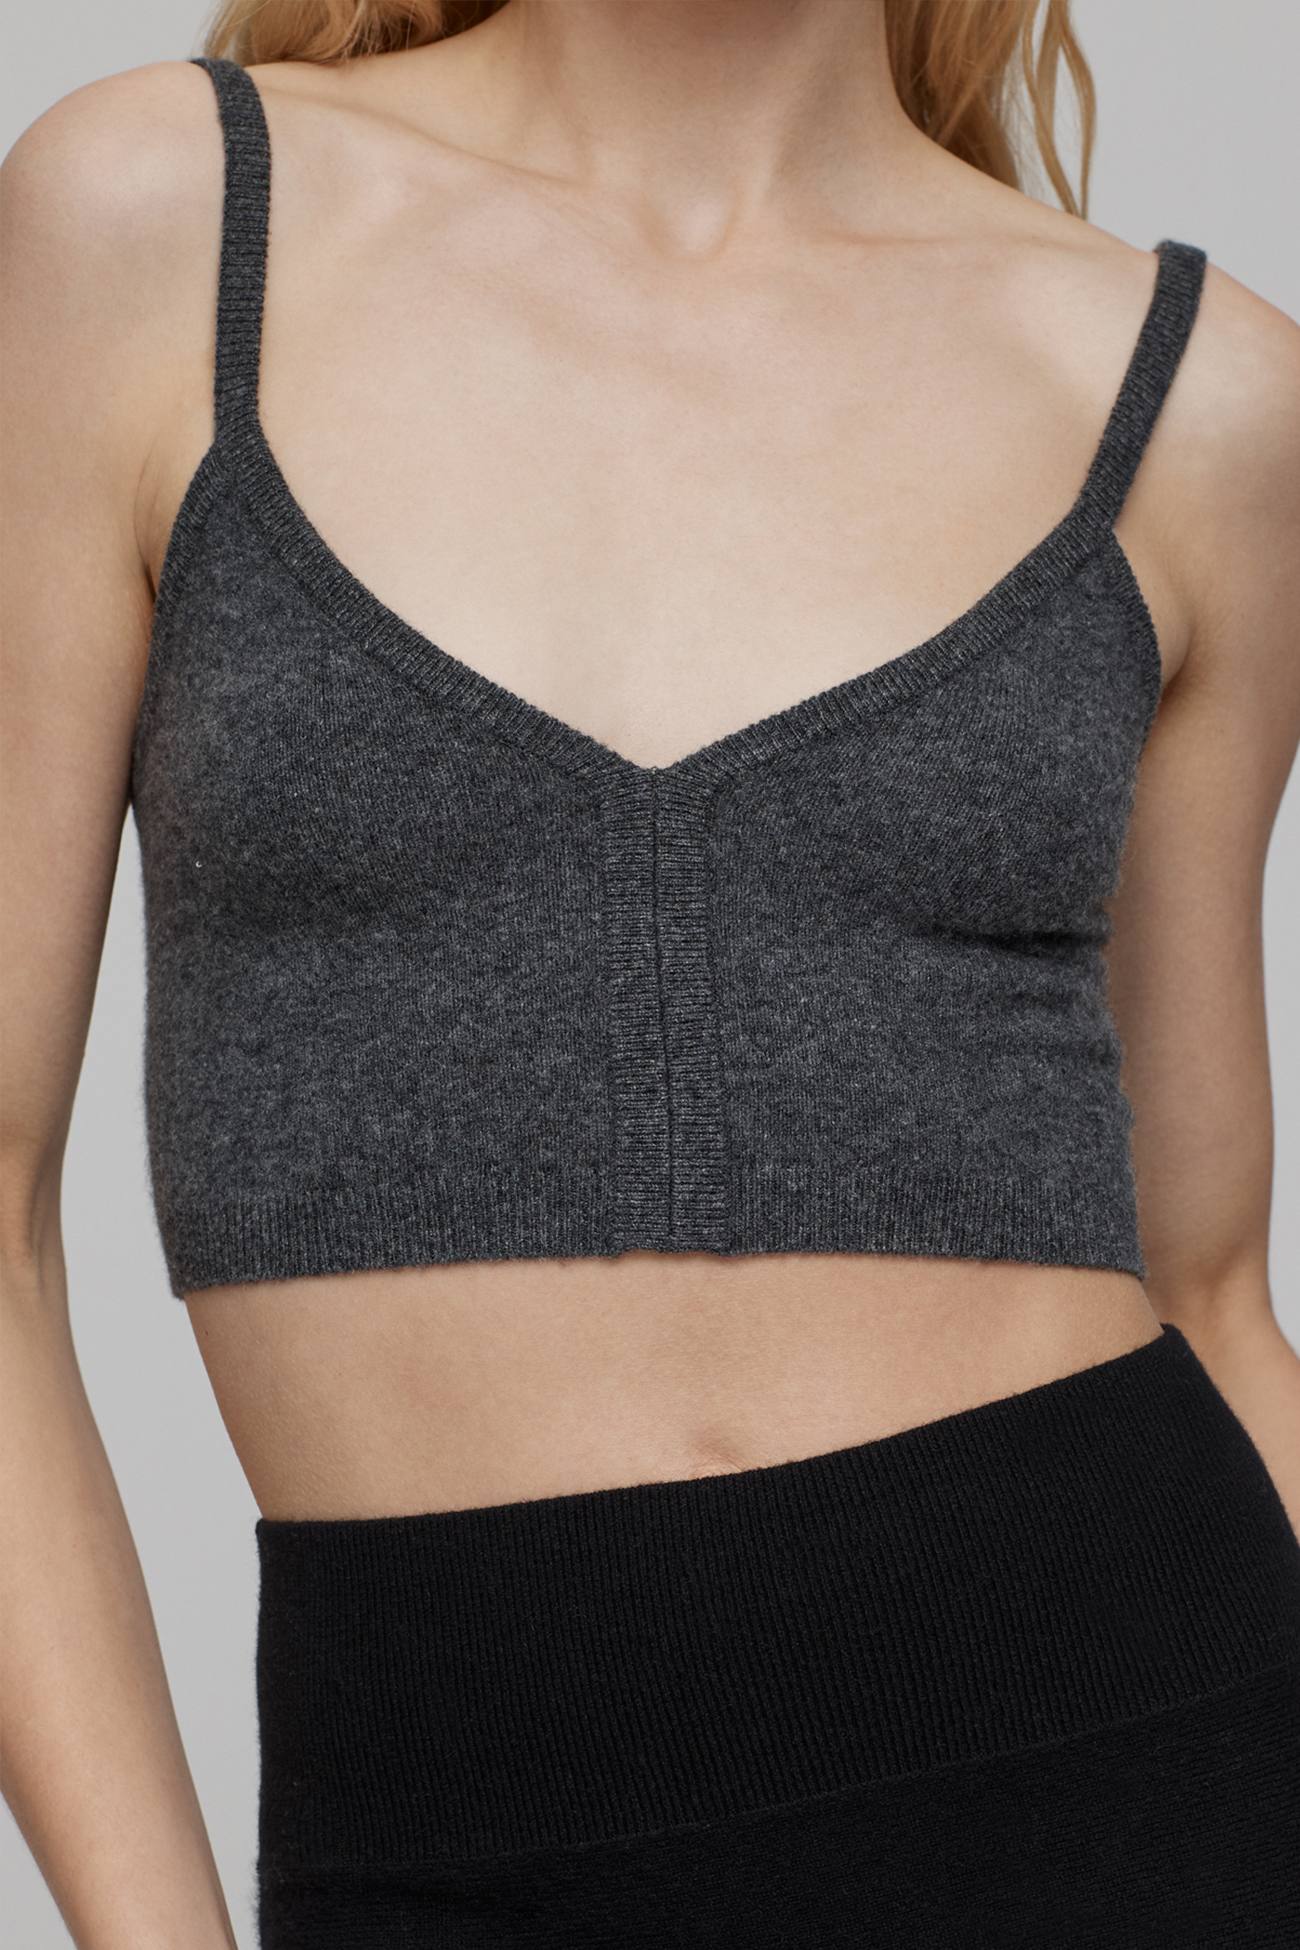 Women's cashmere bra top